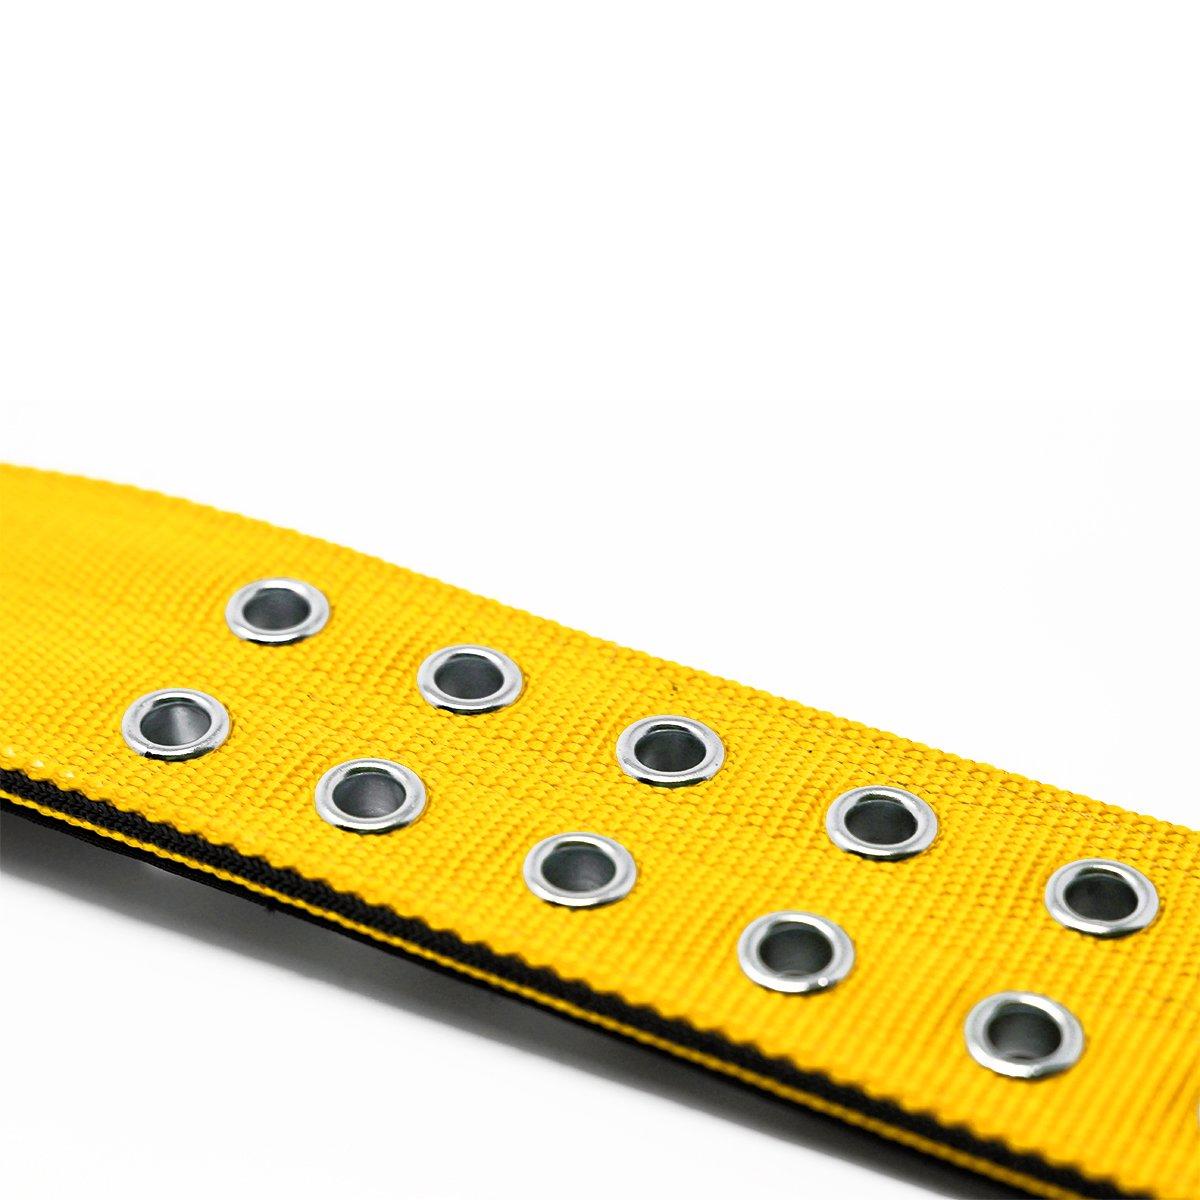 5cm Sporting Collar - Mustard Yellow